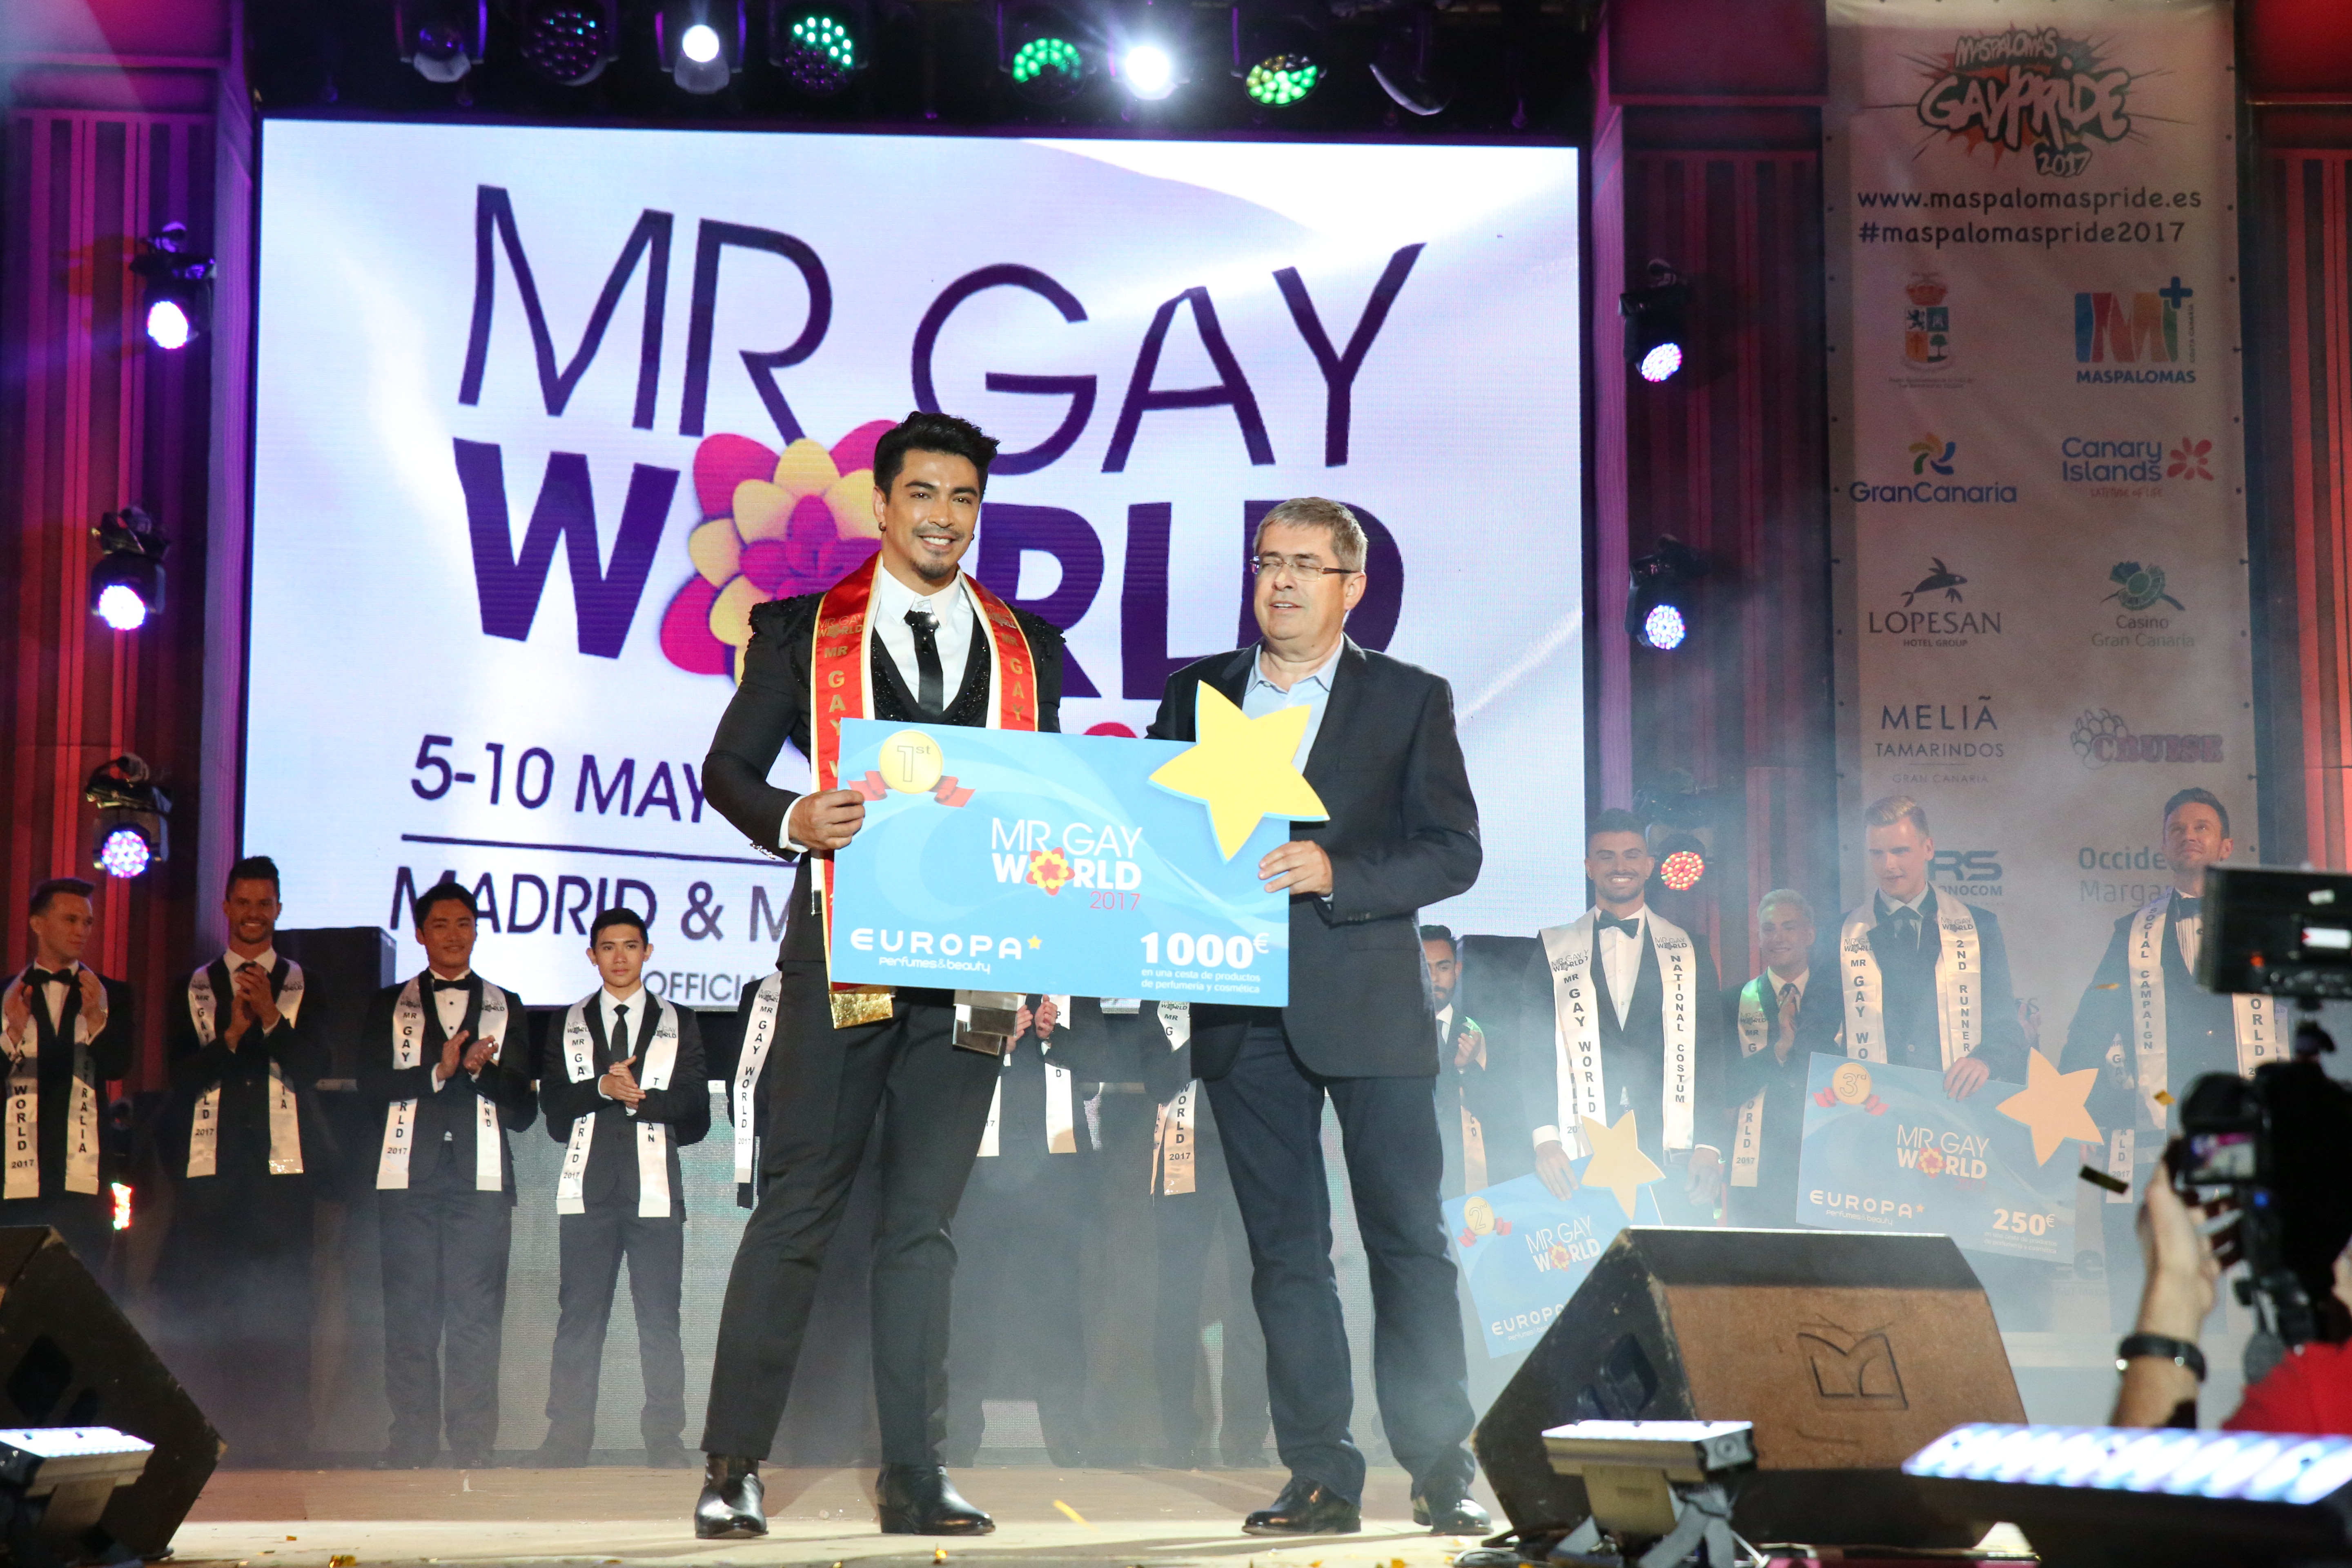 Ganador Mr. Gay Wiorld 2017